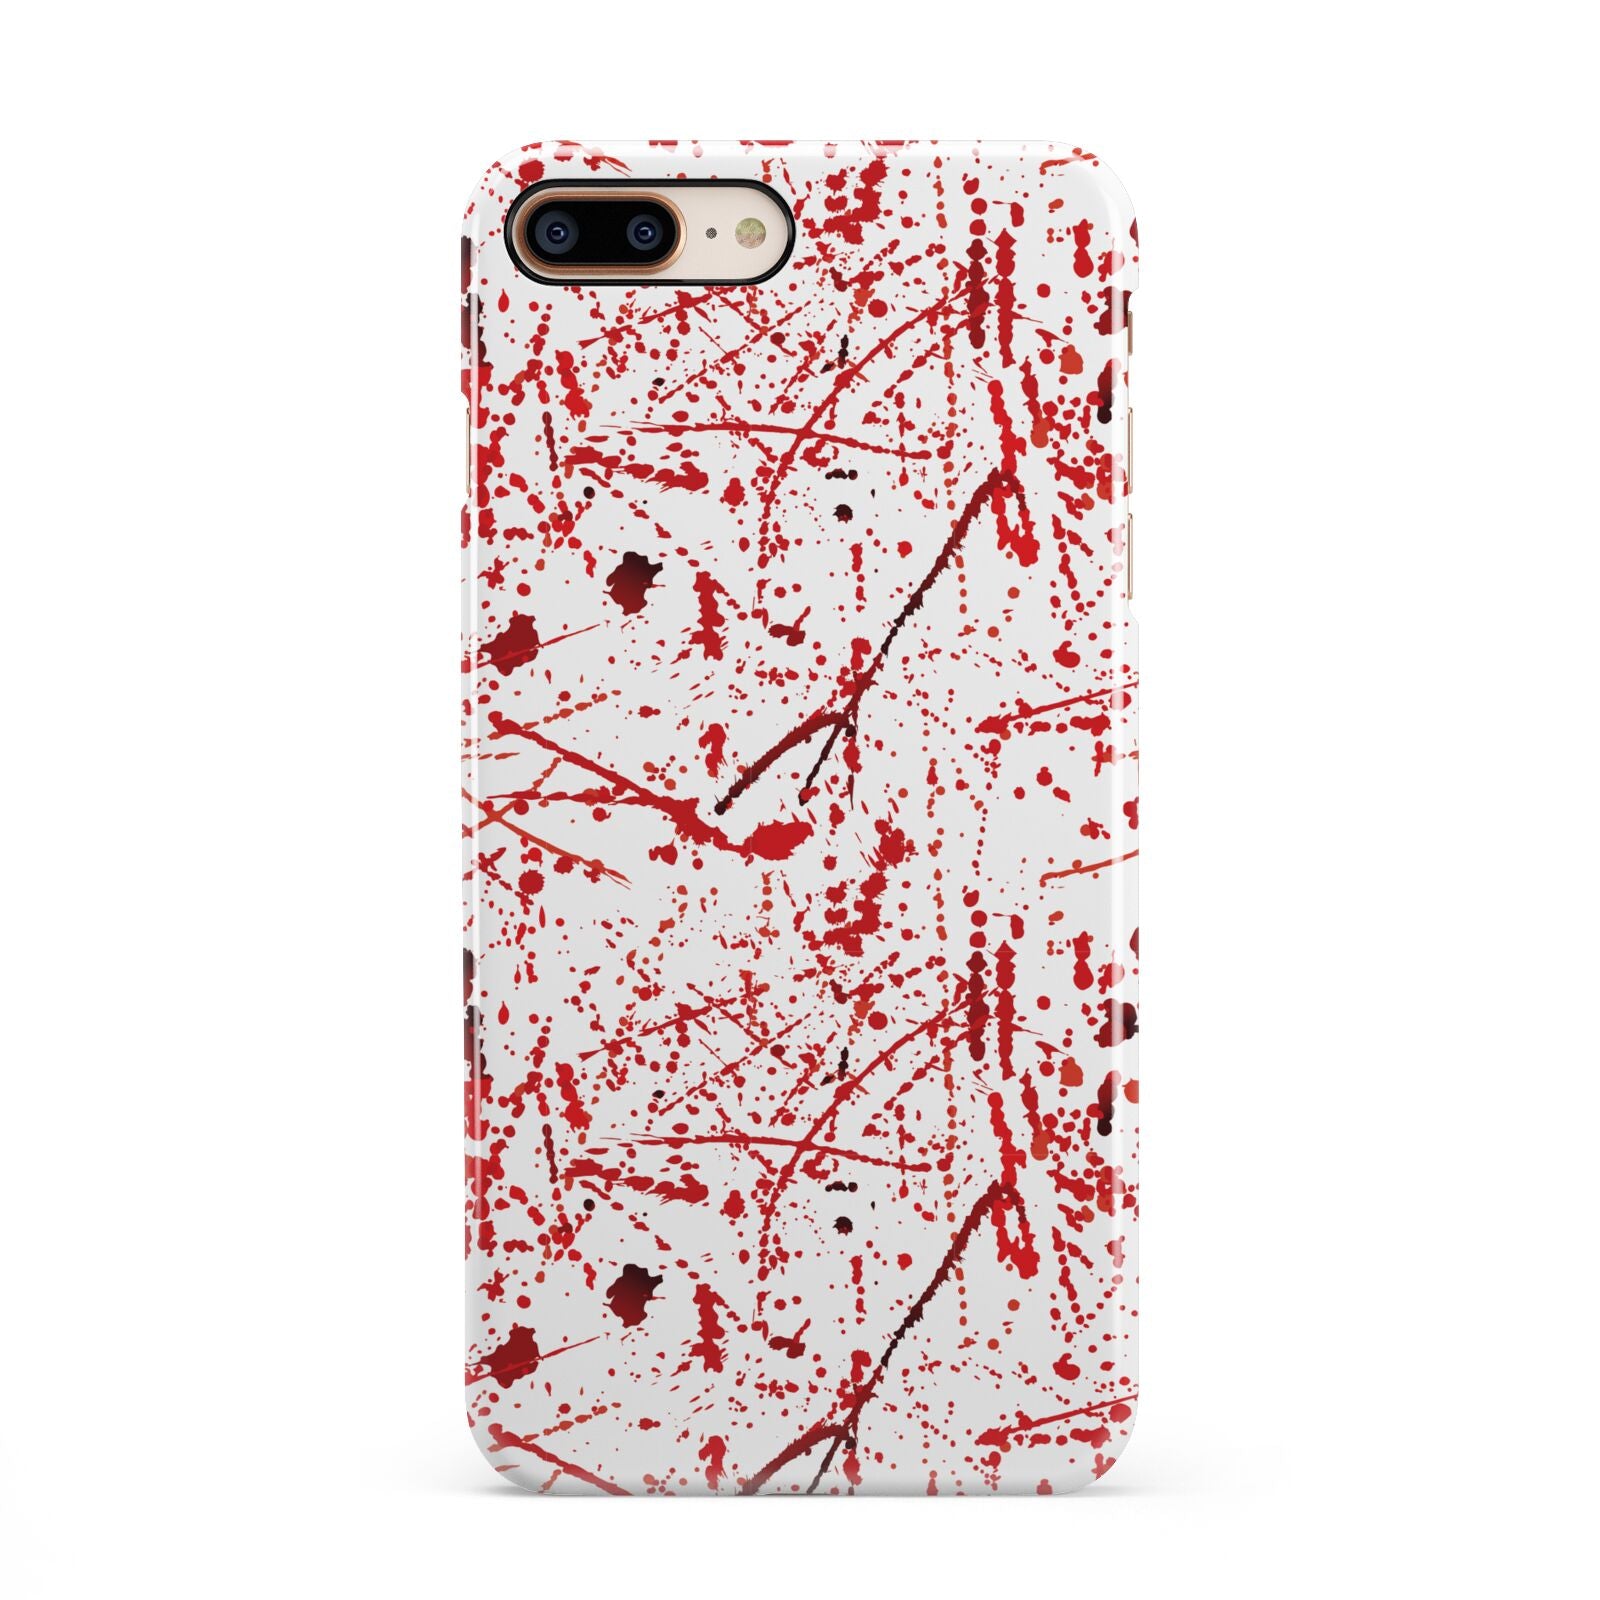 Blood Splatter iPhone 8 Plus 3D Snap Case on Gold Phone